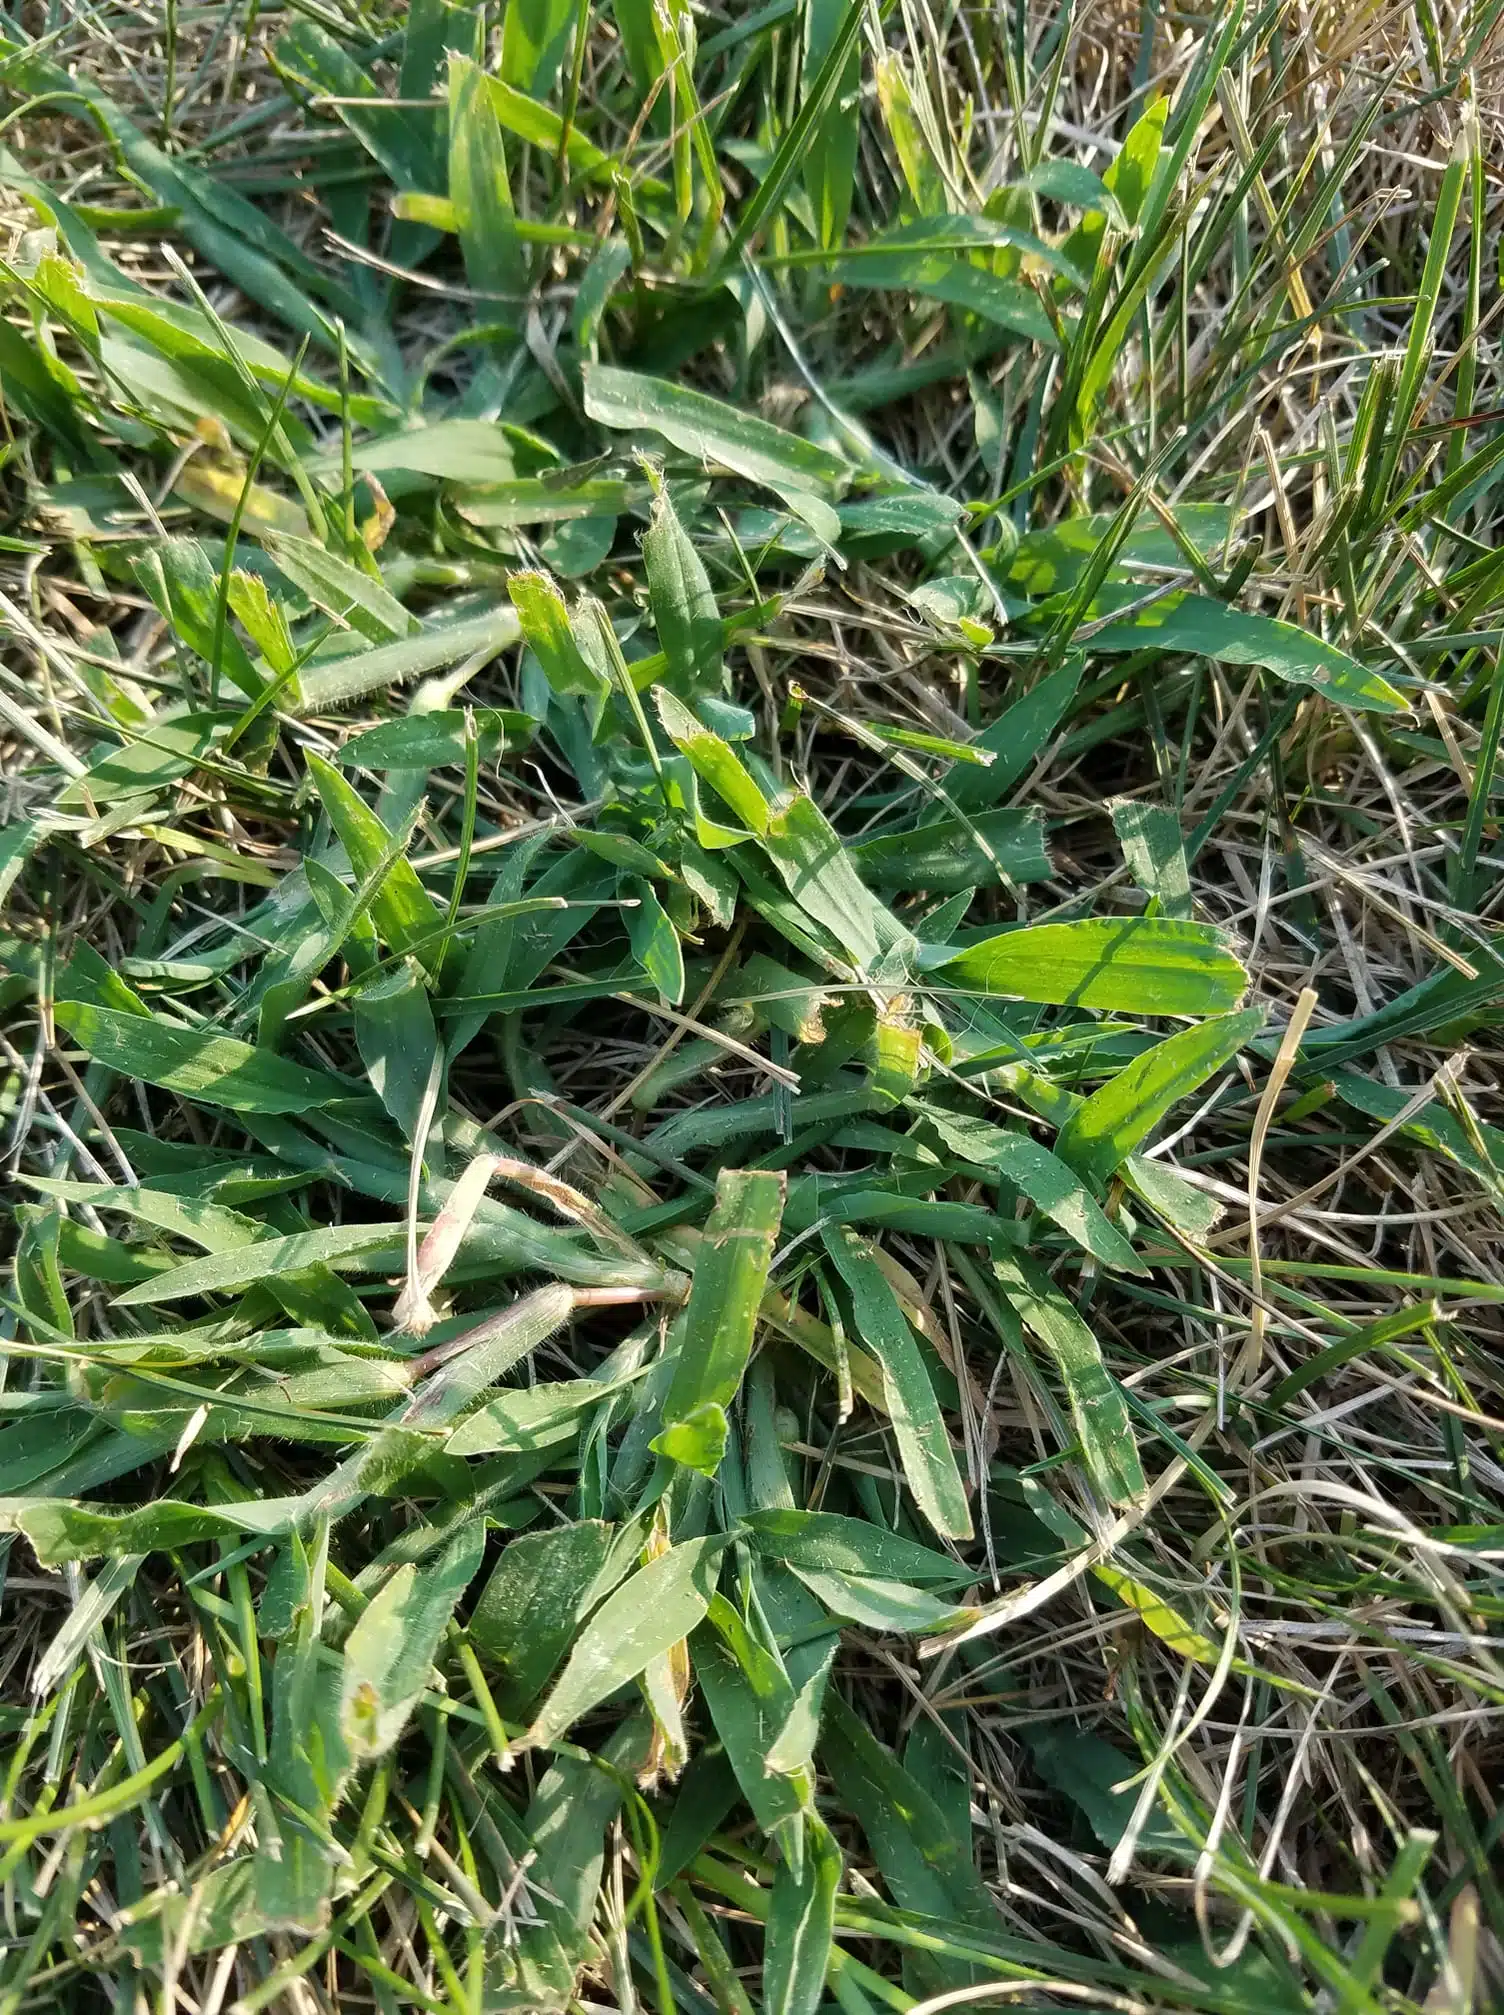 Short-crabgrass